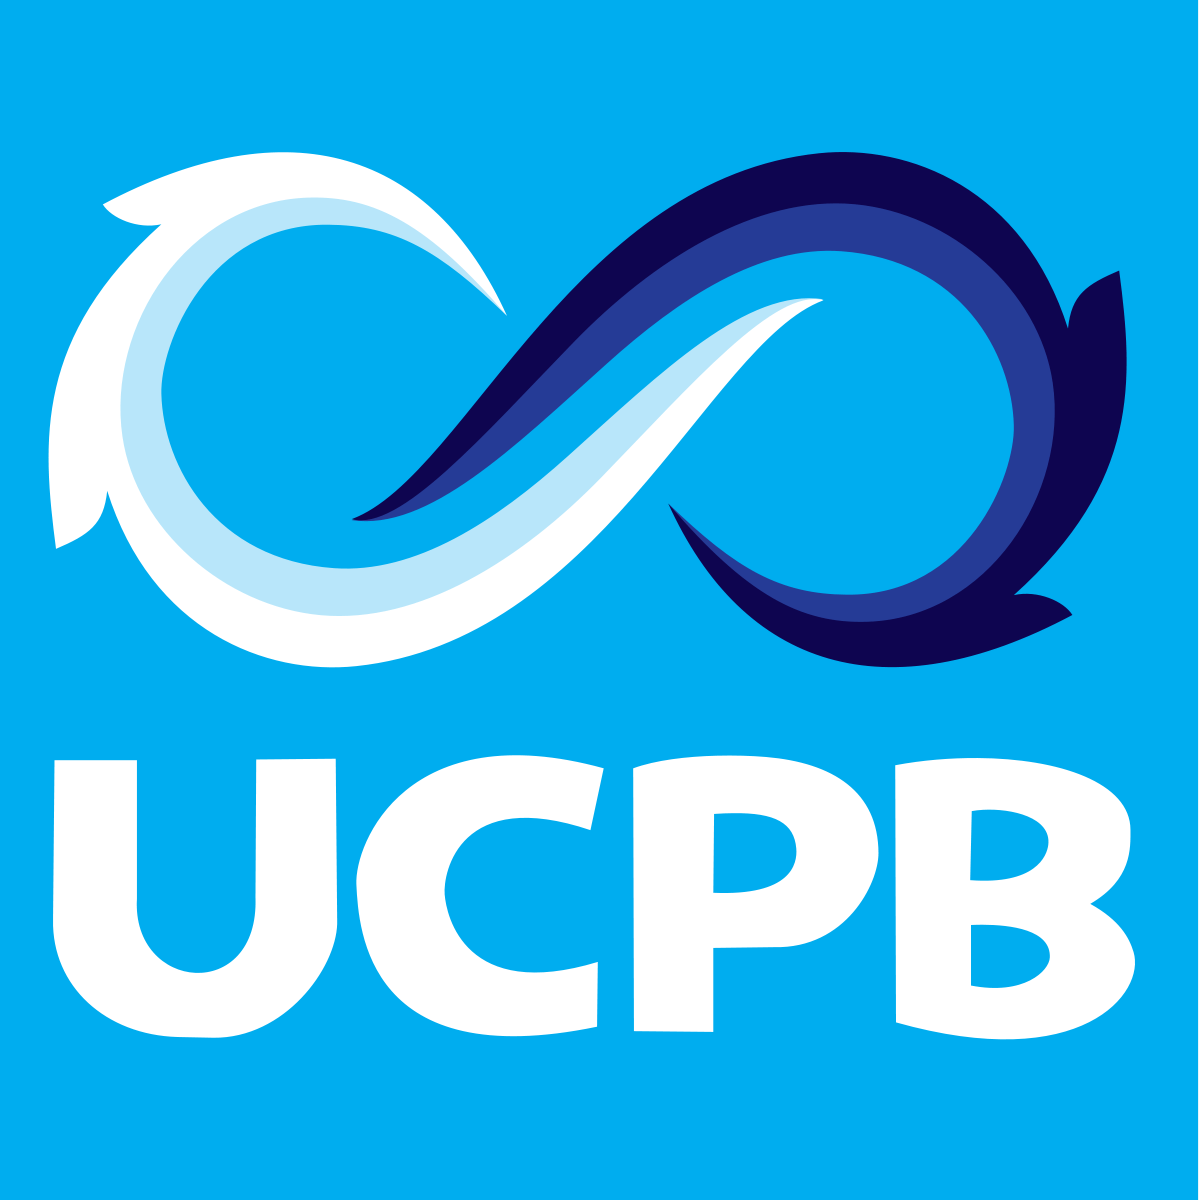 Cocolife Logo - United Coconut Planters Bank